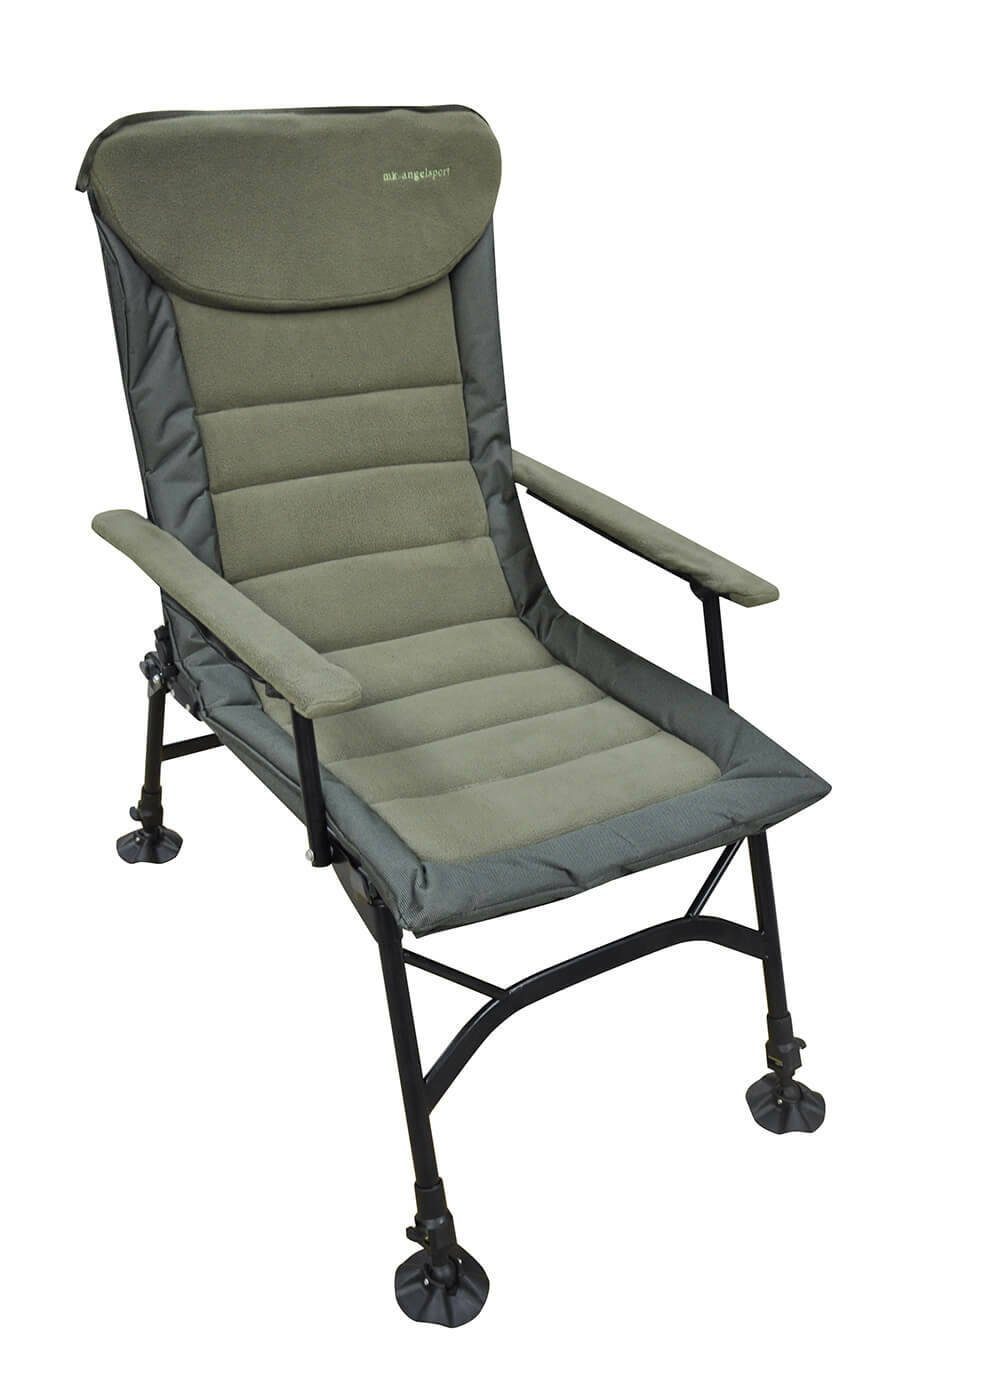 MK Angelsport Angelstuhl MK Kingsize Recliner pro Carp Chair